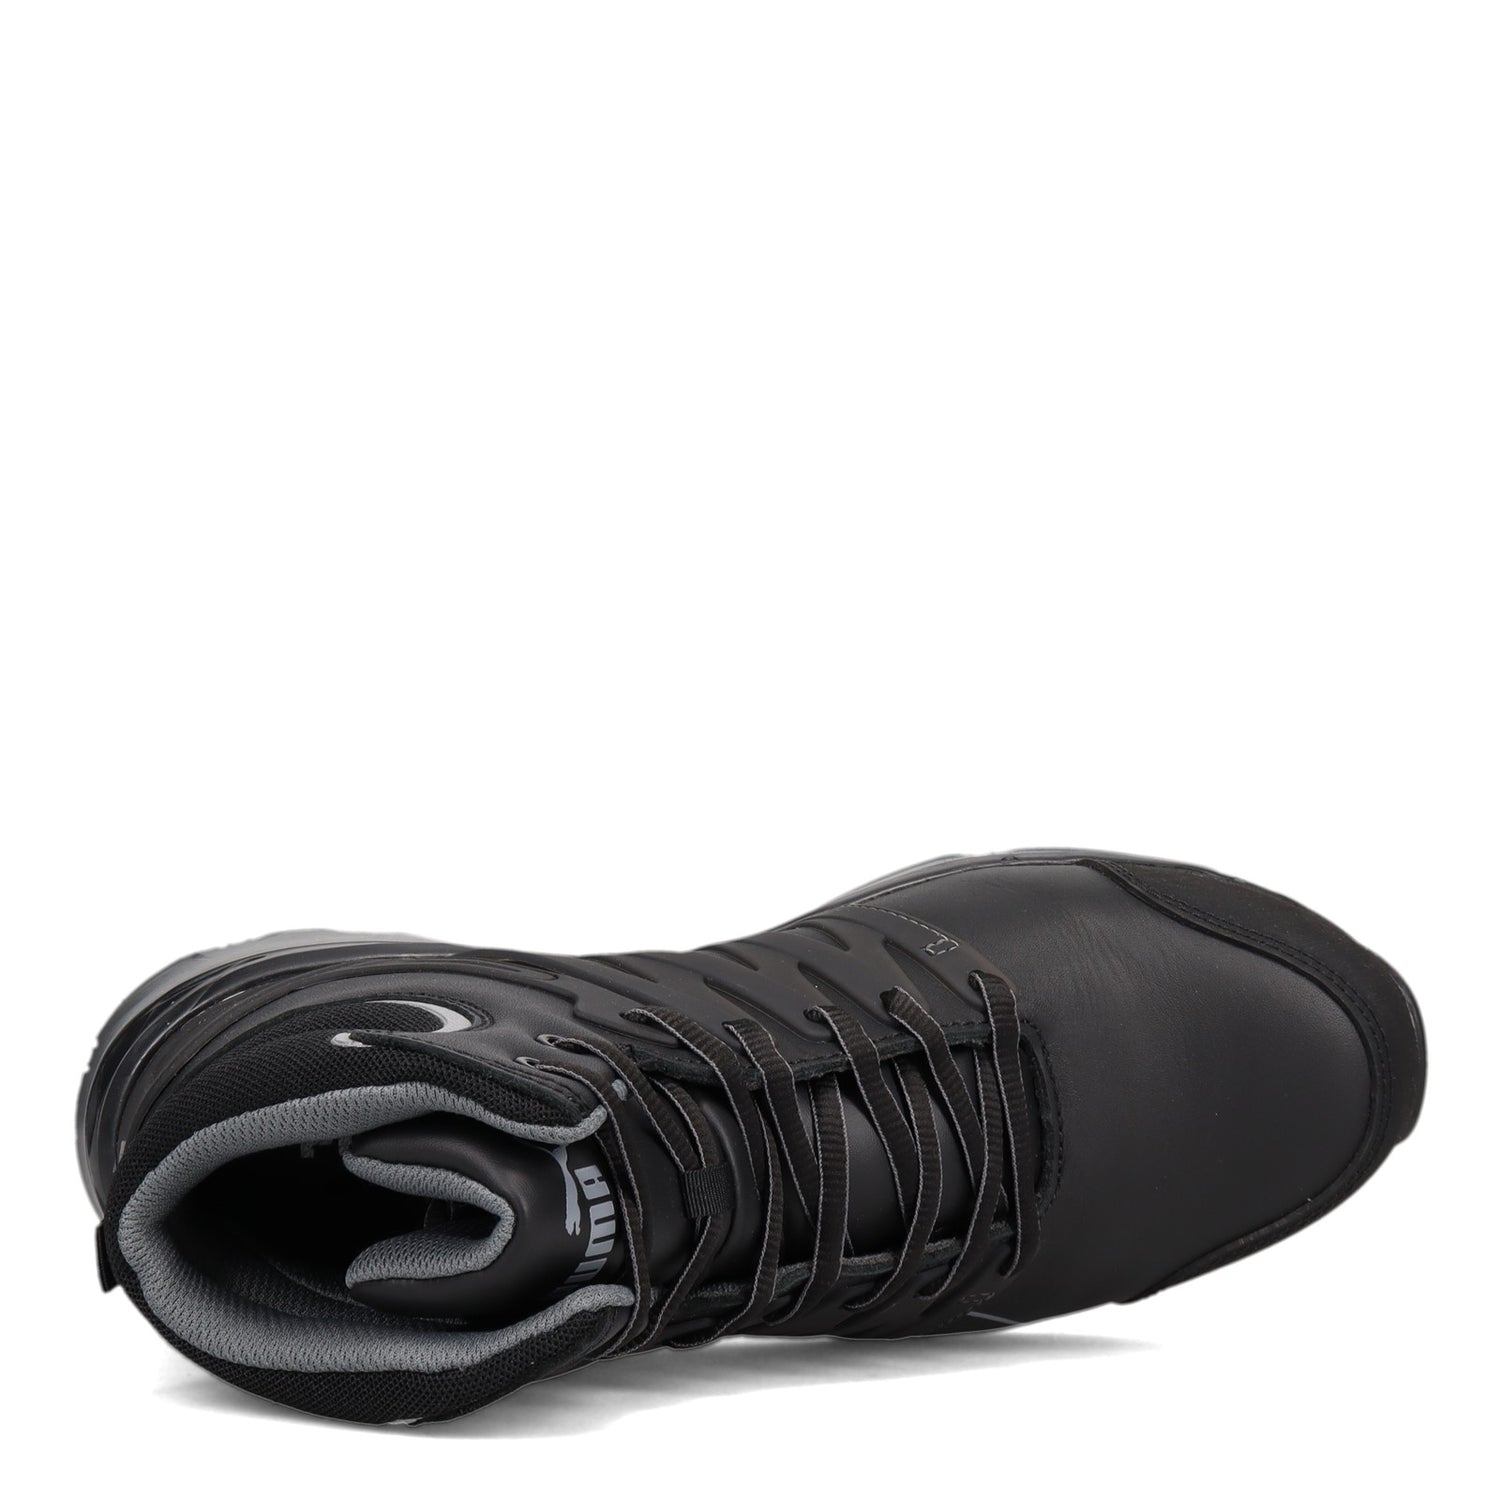 Puma Safety Rush 2.0 Composite Toe SD Men's Shoes Black : 11 M